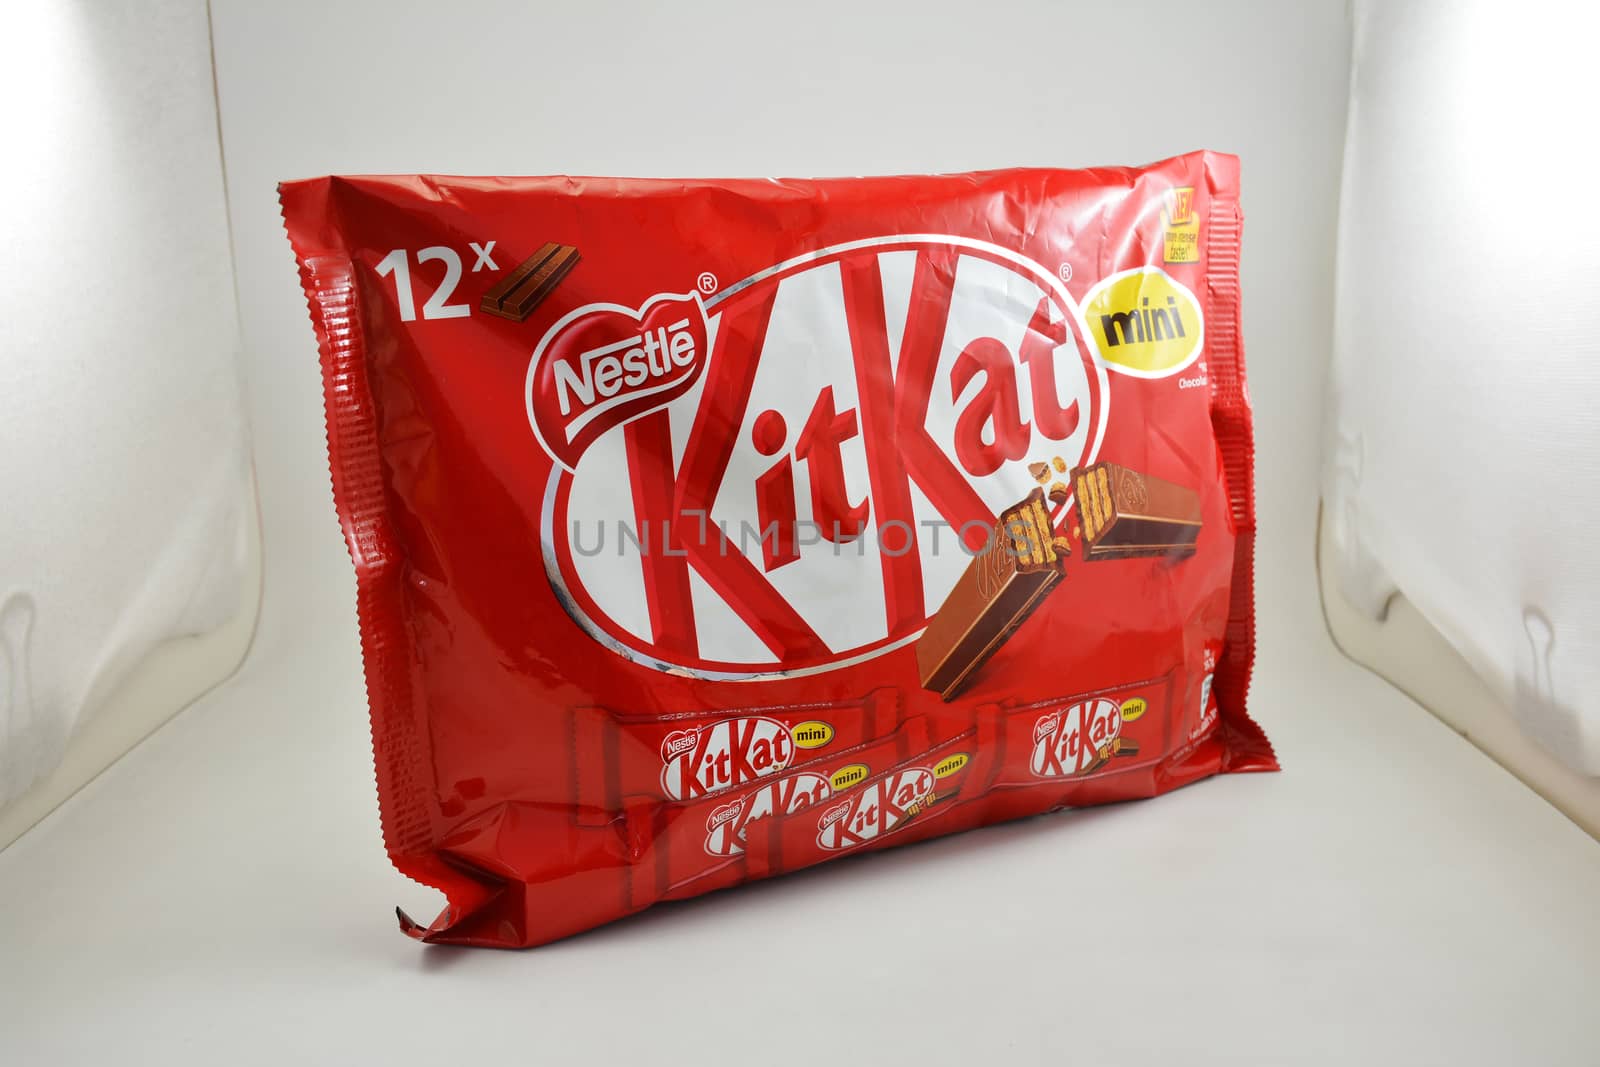 Nestle Kit Kat mini chocolate in Manila, Philippines by imwaltersy